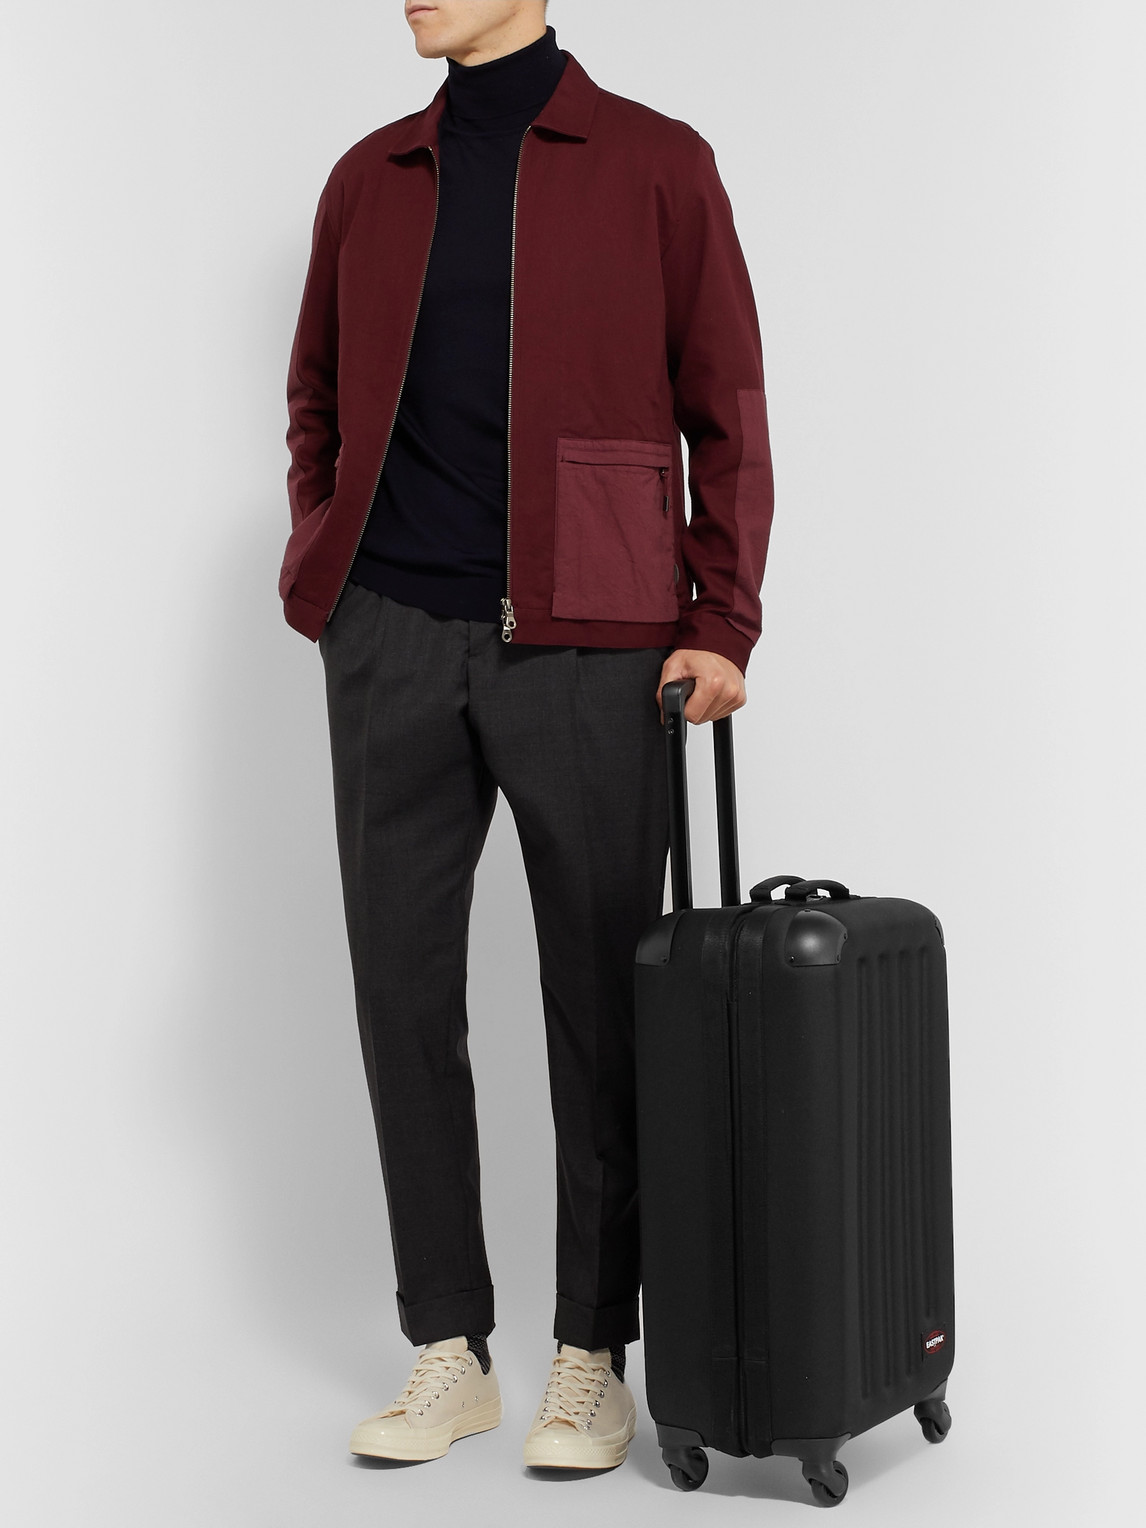 Eastpak Tranzshell Multiwheel 67cm Suitcase In Black | ModeSens